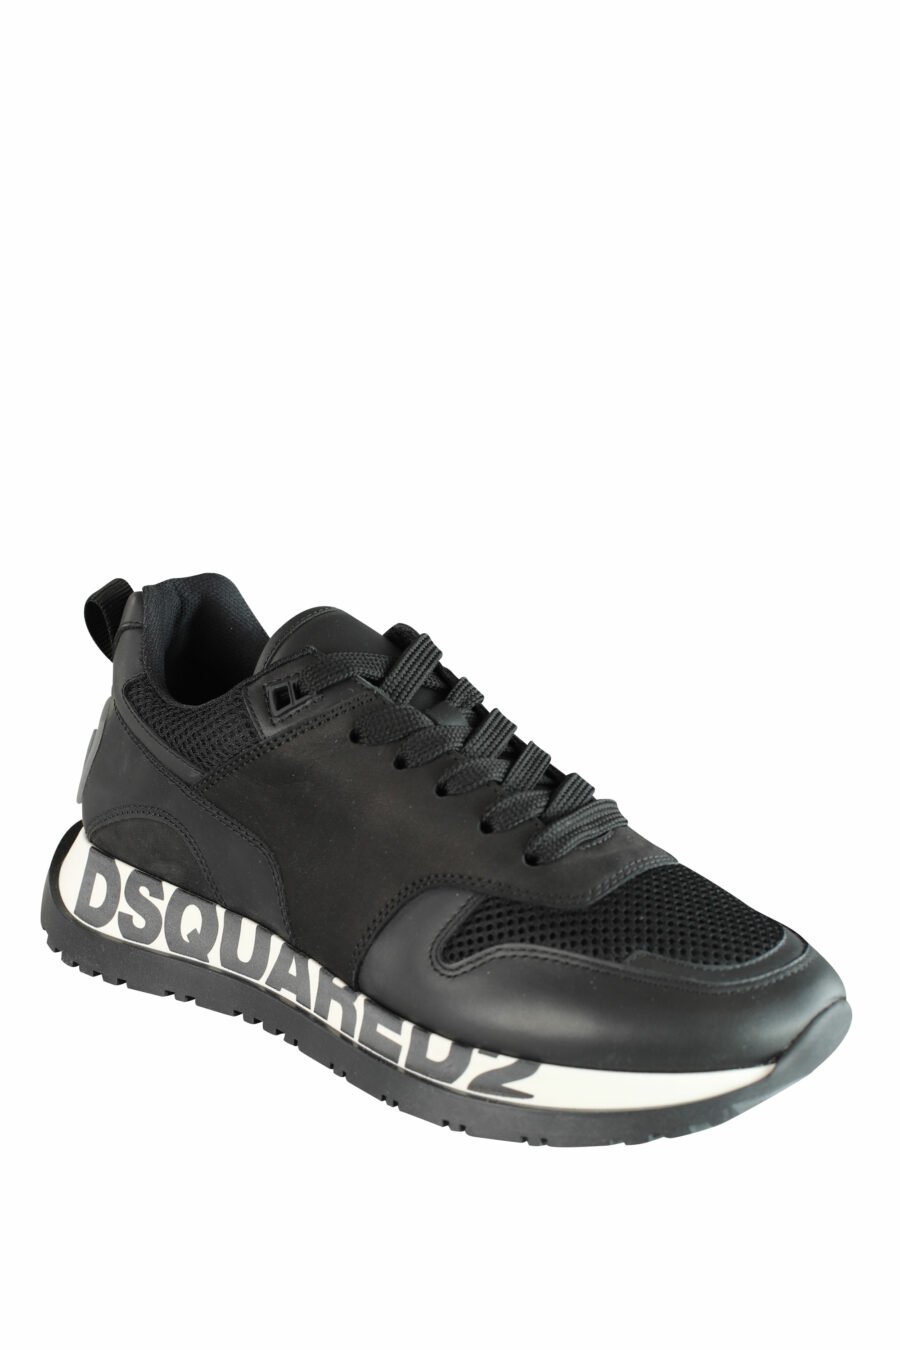 Zapatillas negras "running" con suela blanca con logo negro - IMG 1431